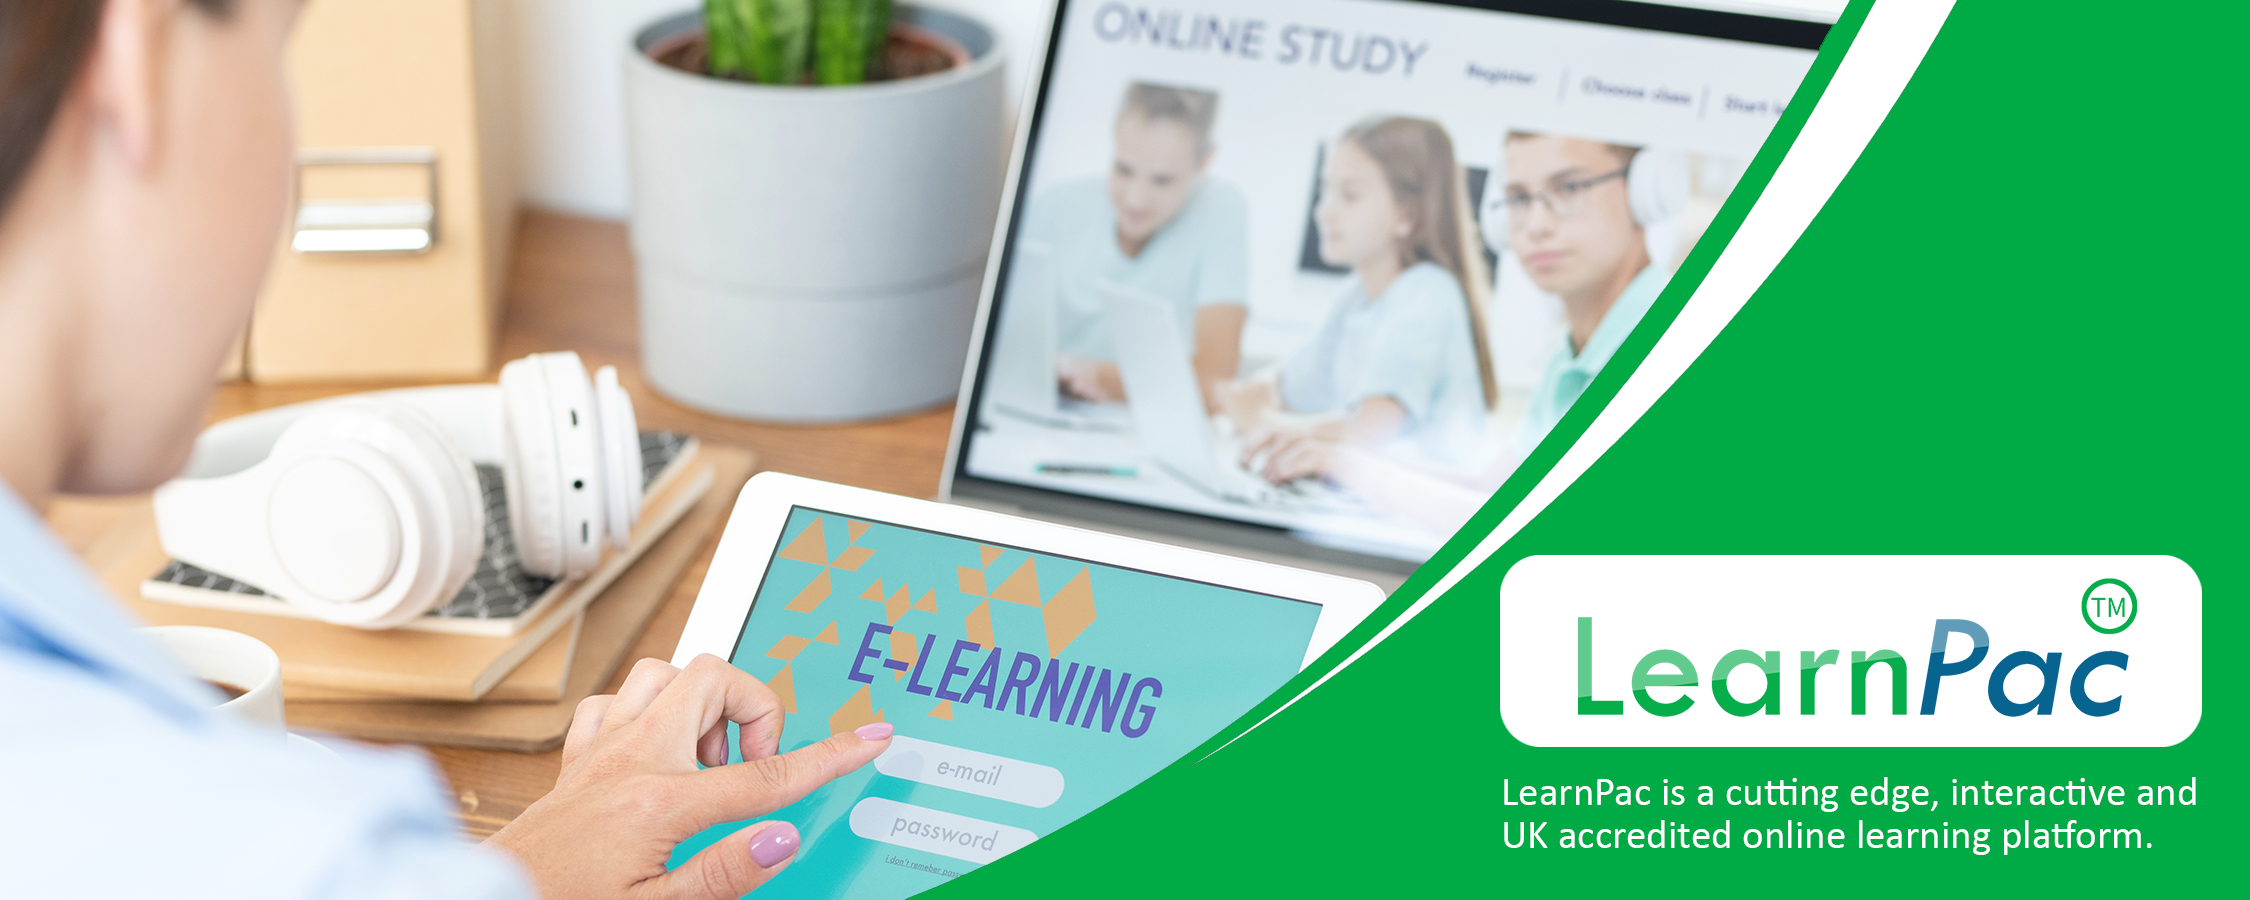 Food Hygiene in the Early Years Settings - Online Learning Courses - E-Learning Courses - LearnPac Systems UK --